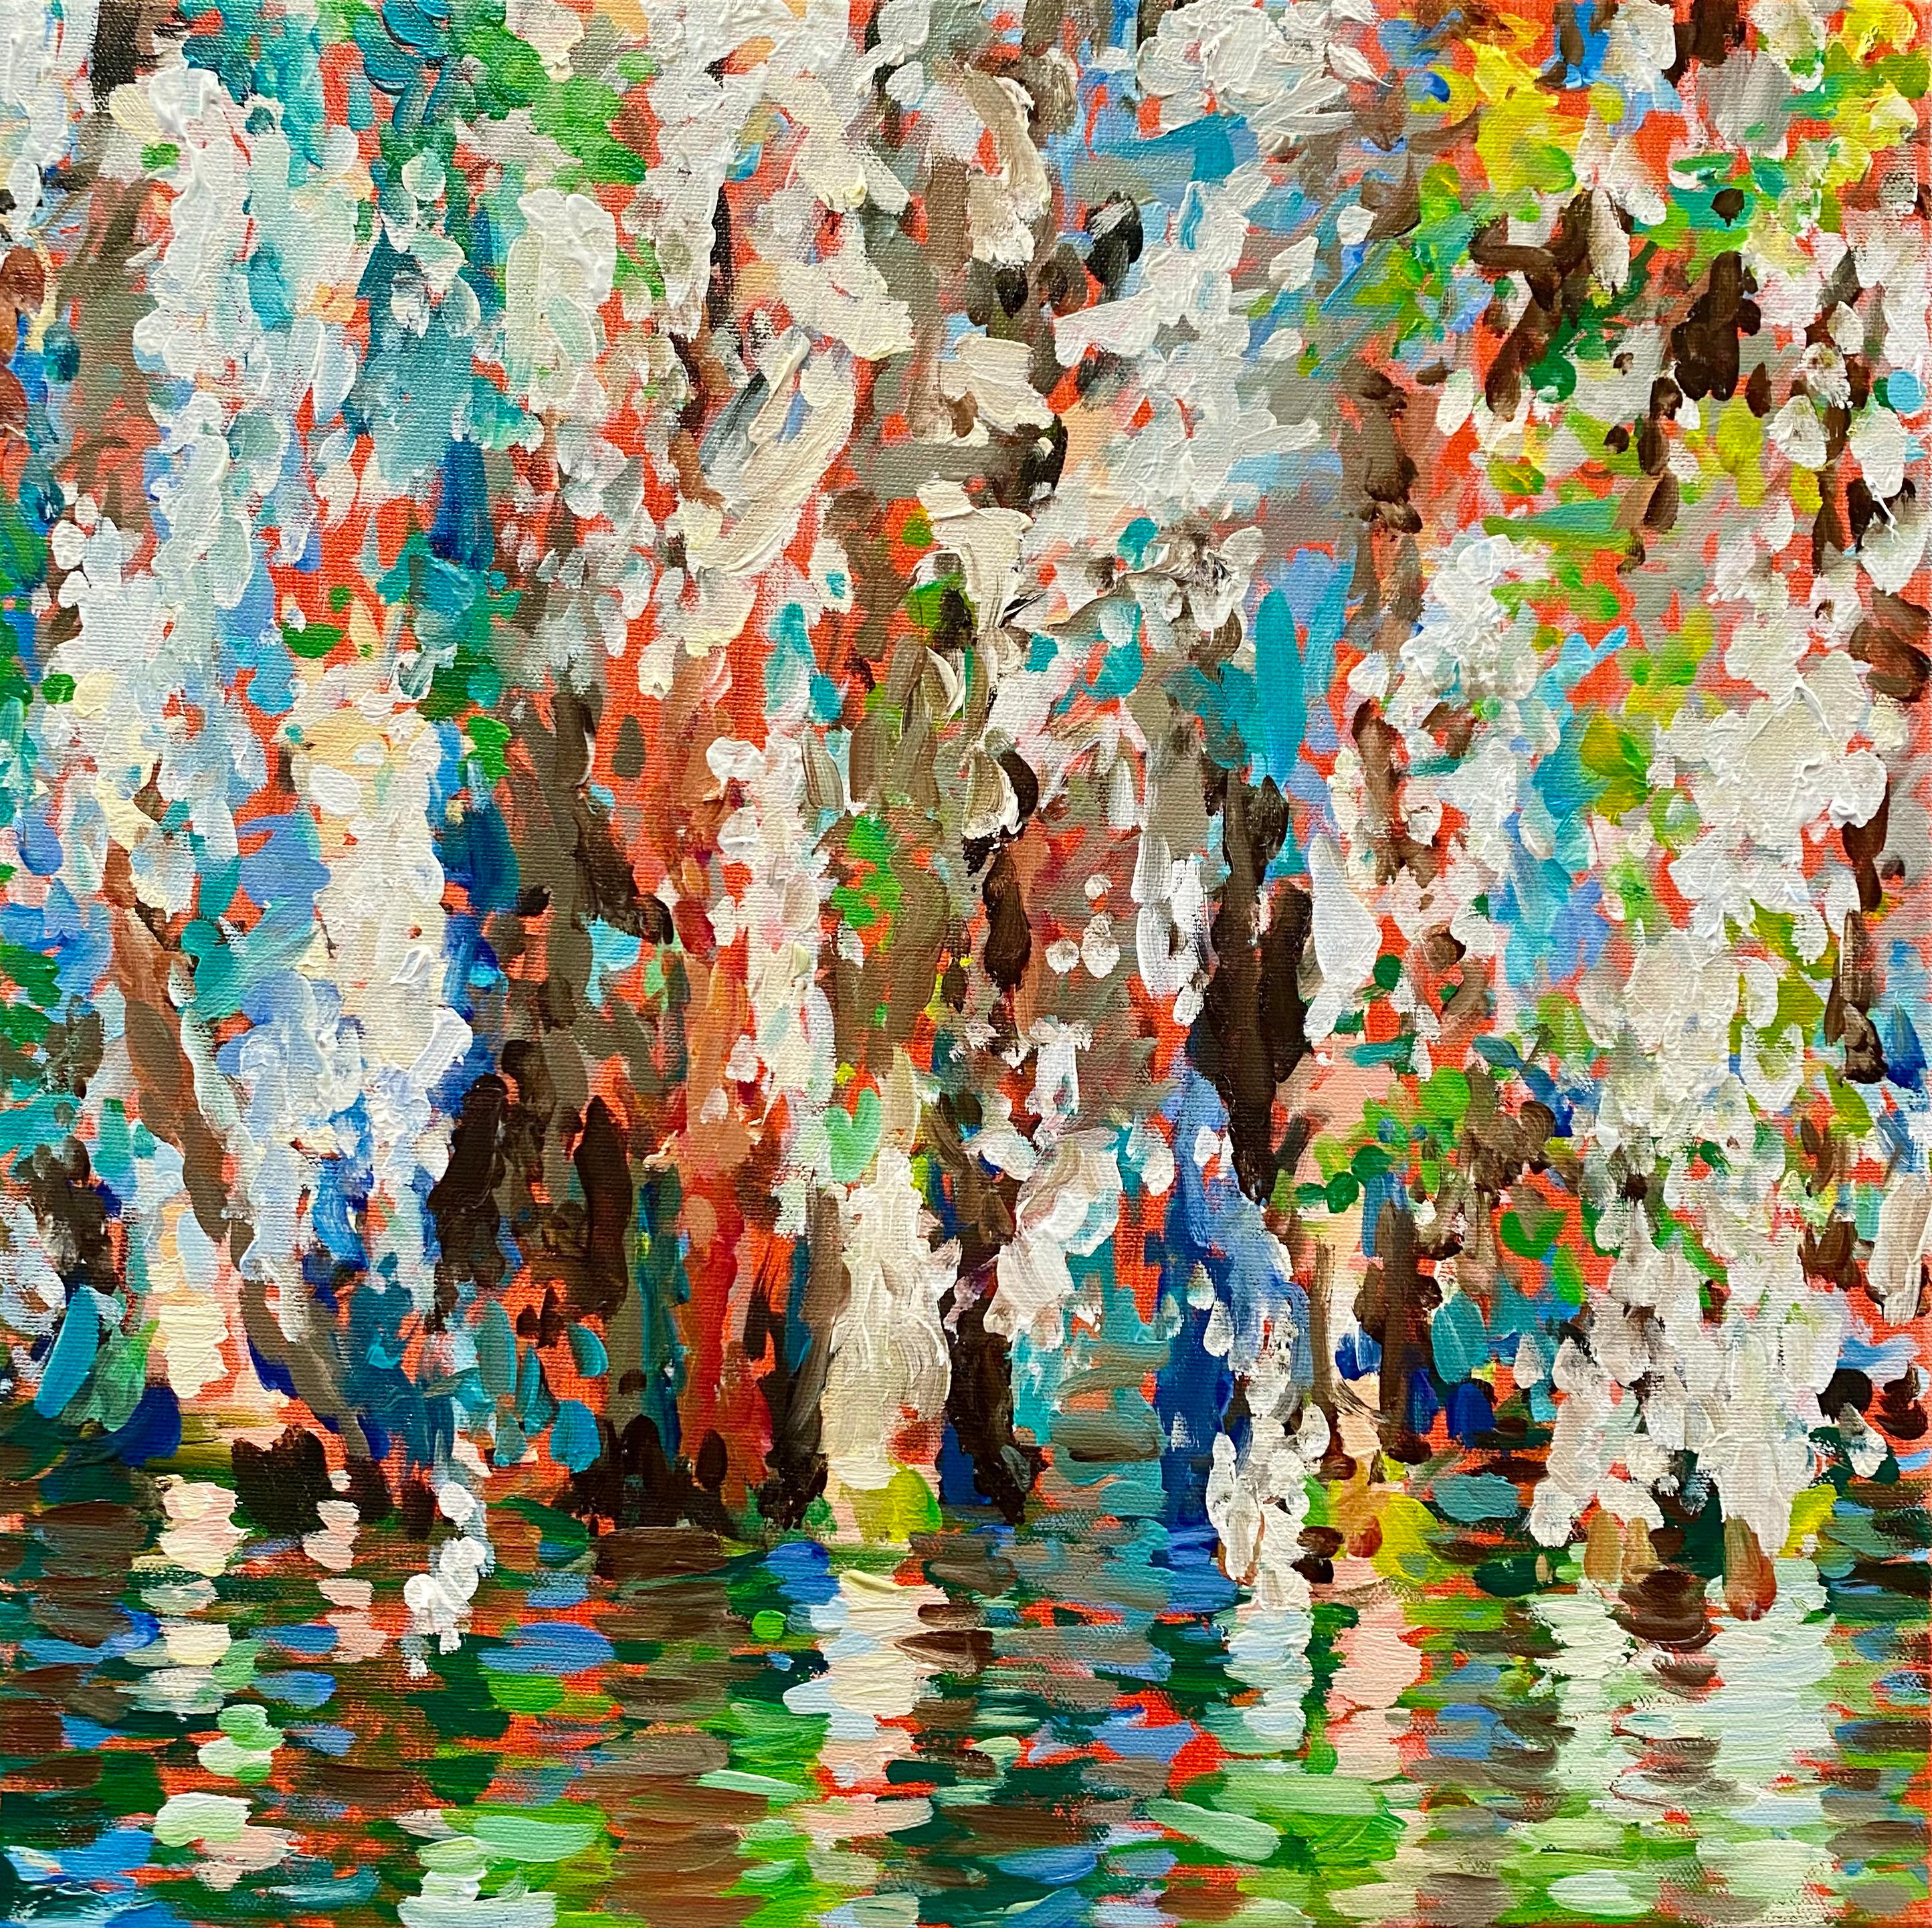 Jill Hackney Landscape Painting - "Le marais series, Untitled", Impressionist Oil Painting on Canvas